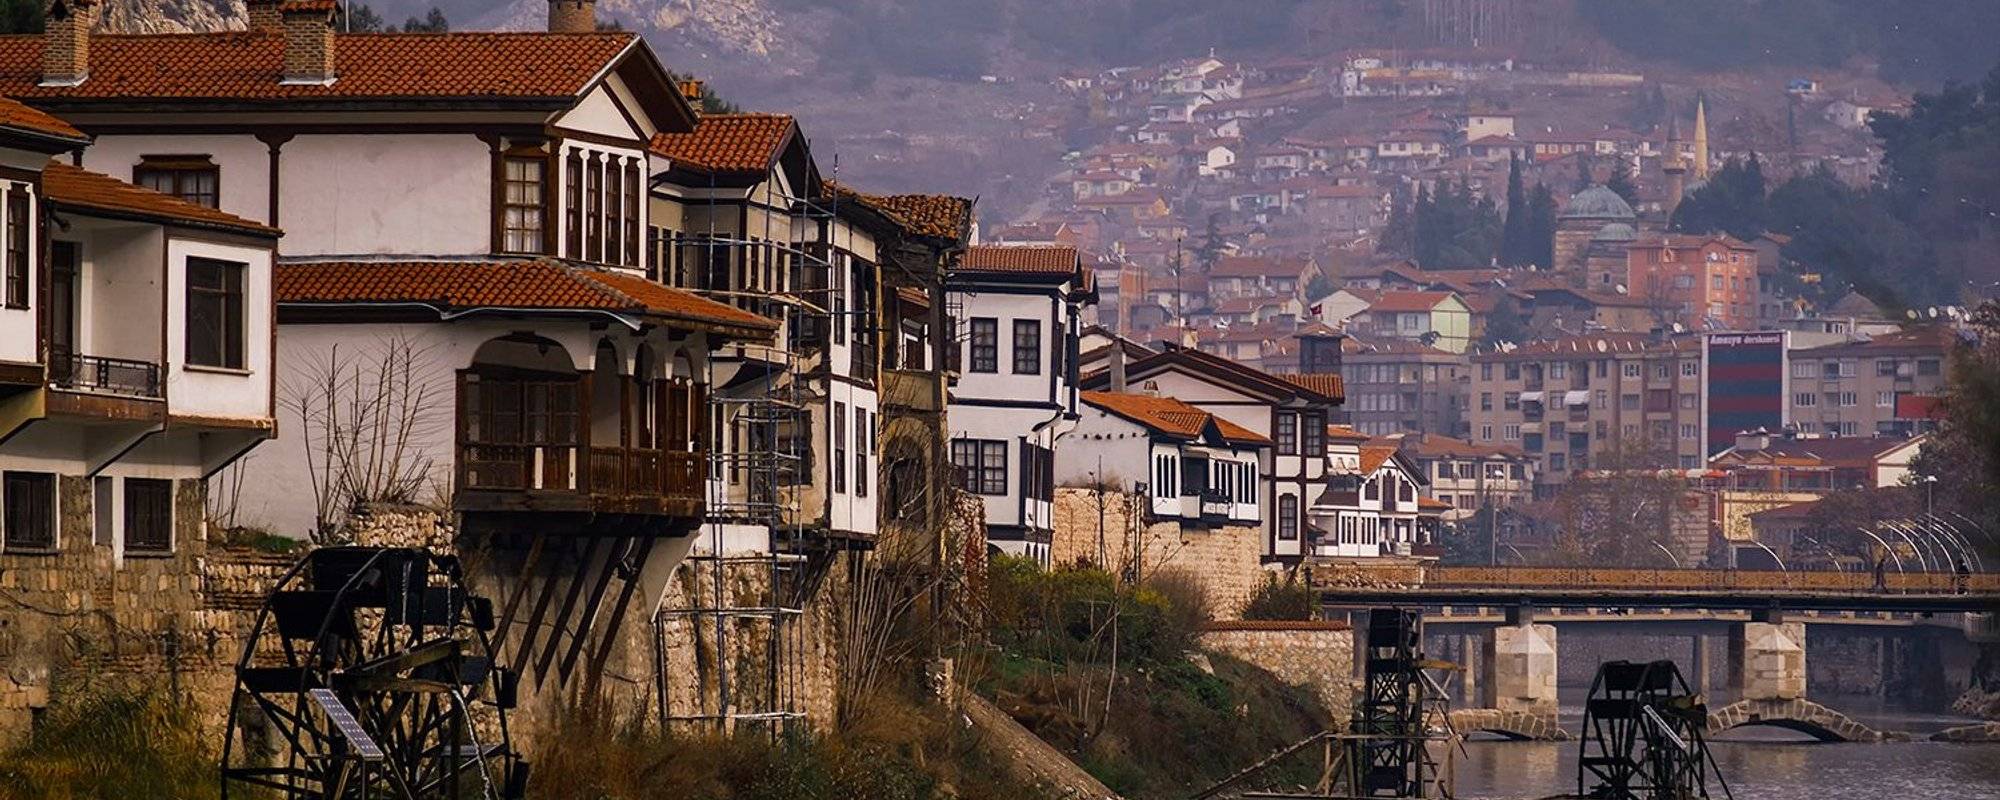 A Travel Story : Amasya - City of the Shahzadahs - Part I